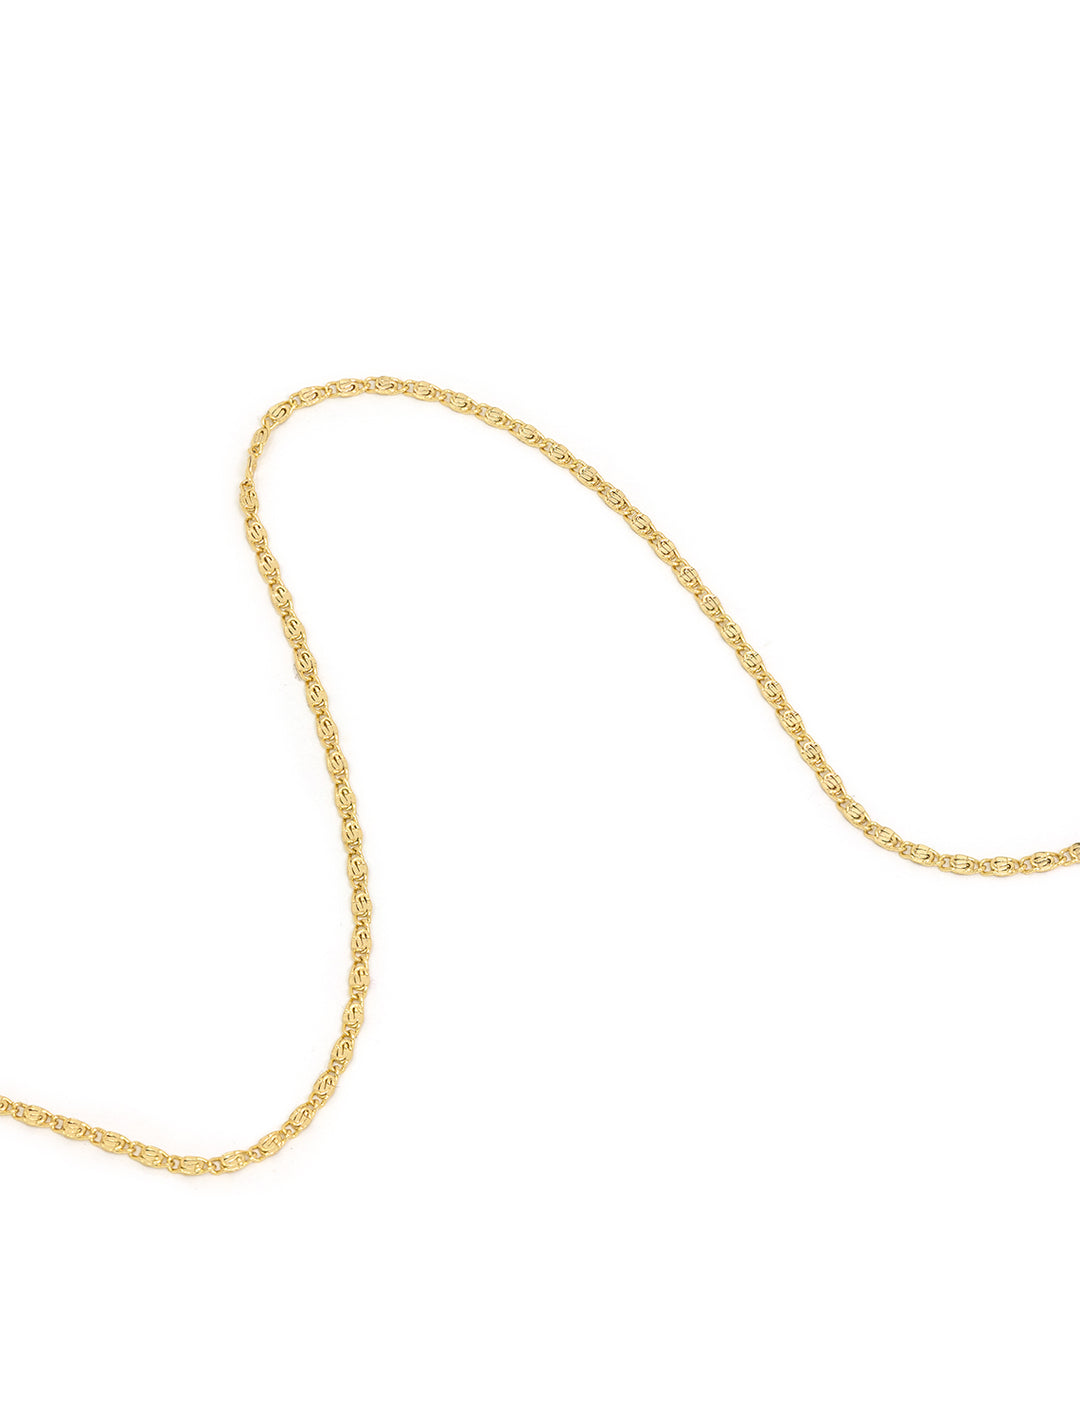 Stylized laydown of Jonesy Wood's juniper necklace.